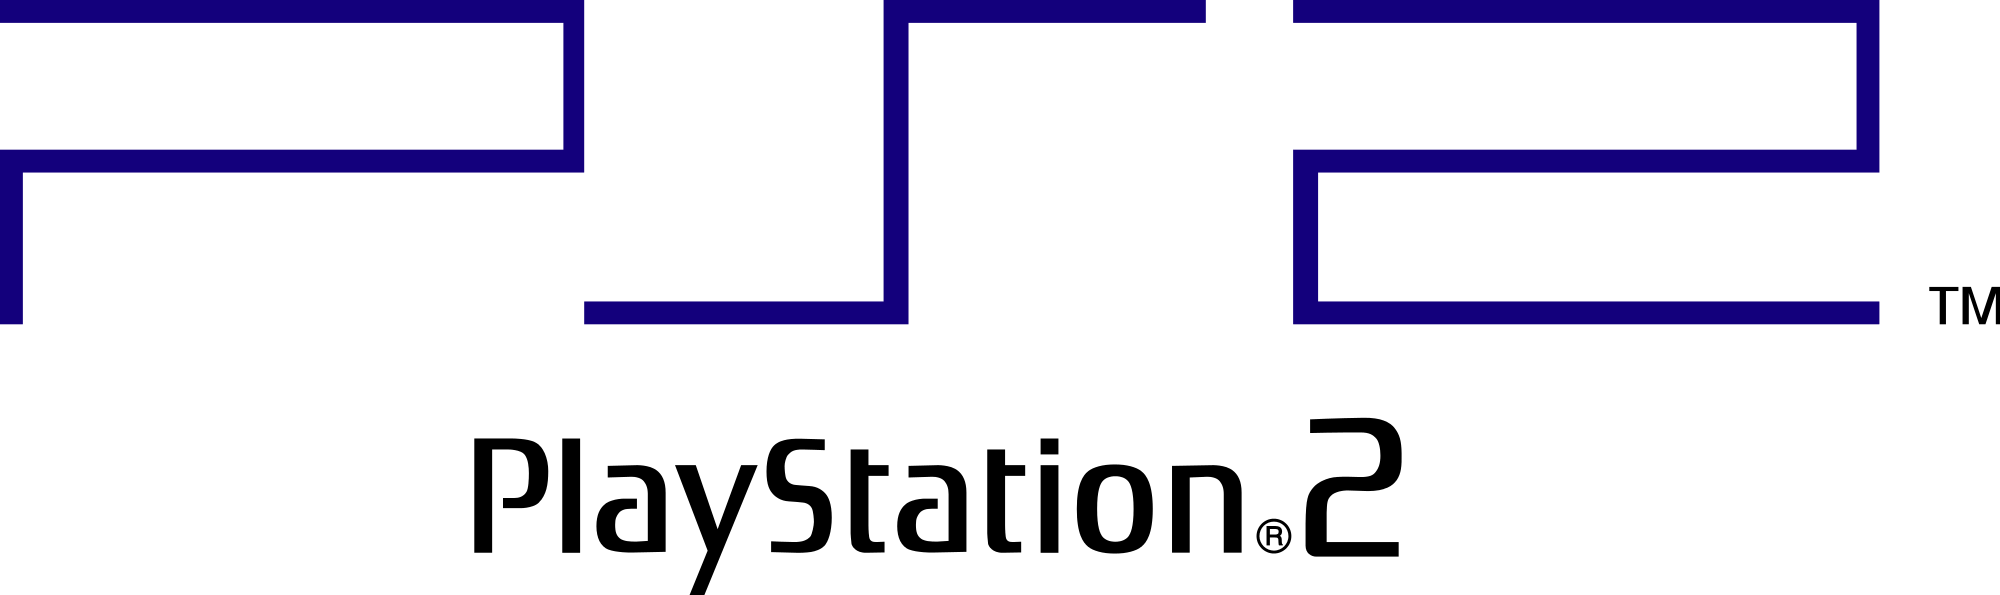 PS2 Logo - File:PlayStation 2 logo.svg - Wikimedia Commons